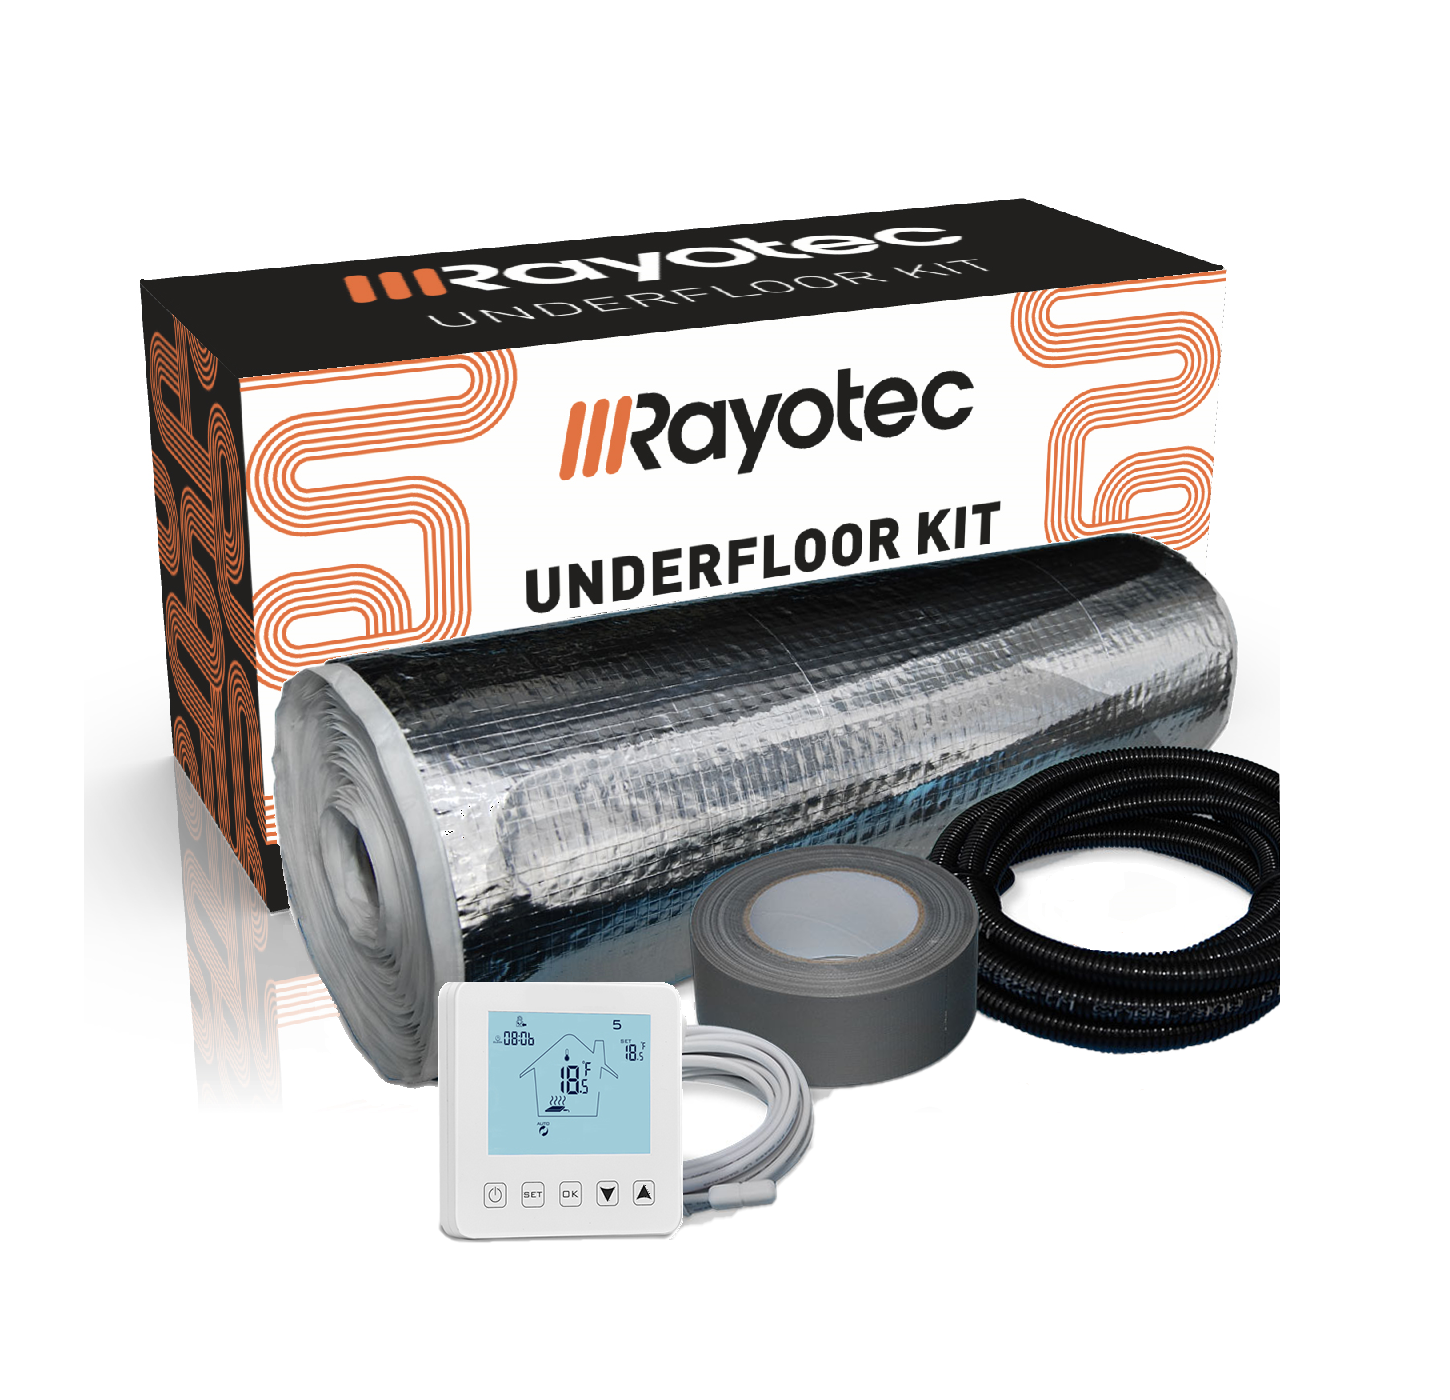 Rayoflex underfloor heating mat kit for under carpet